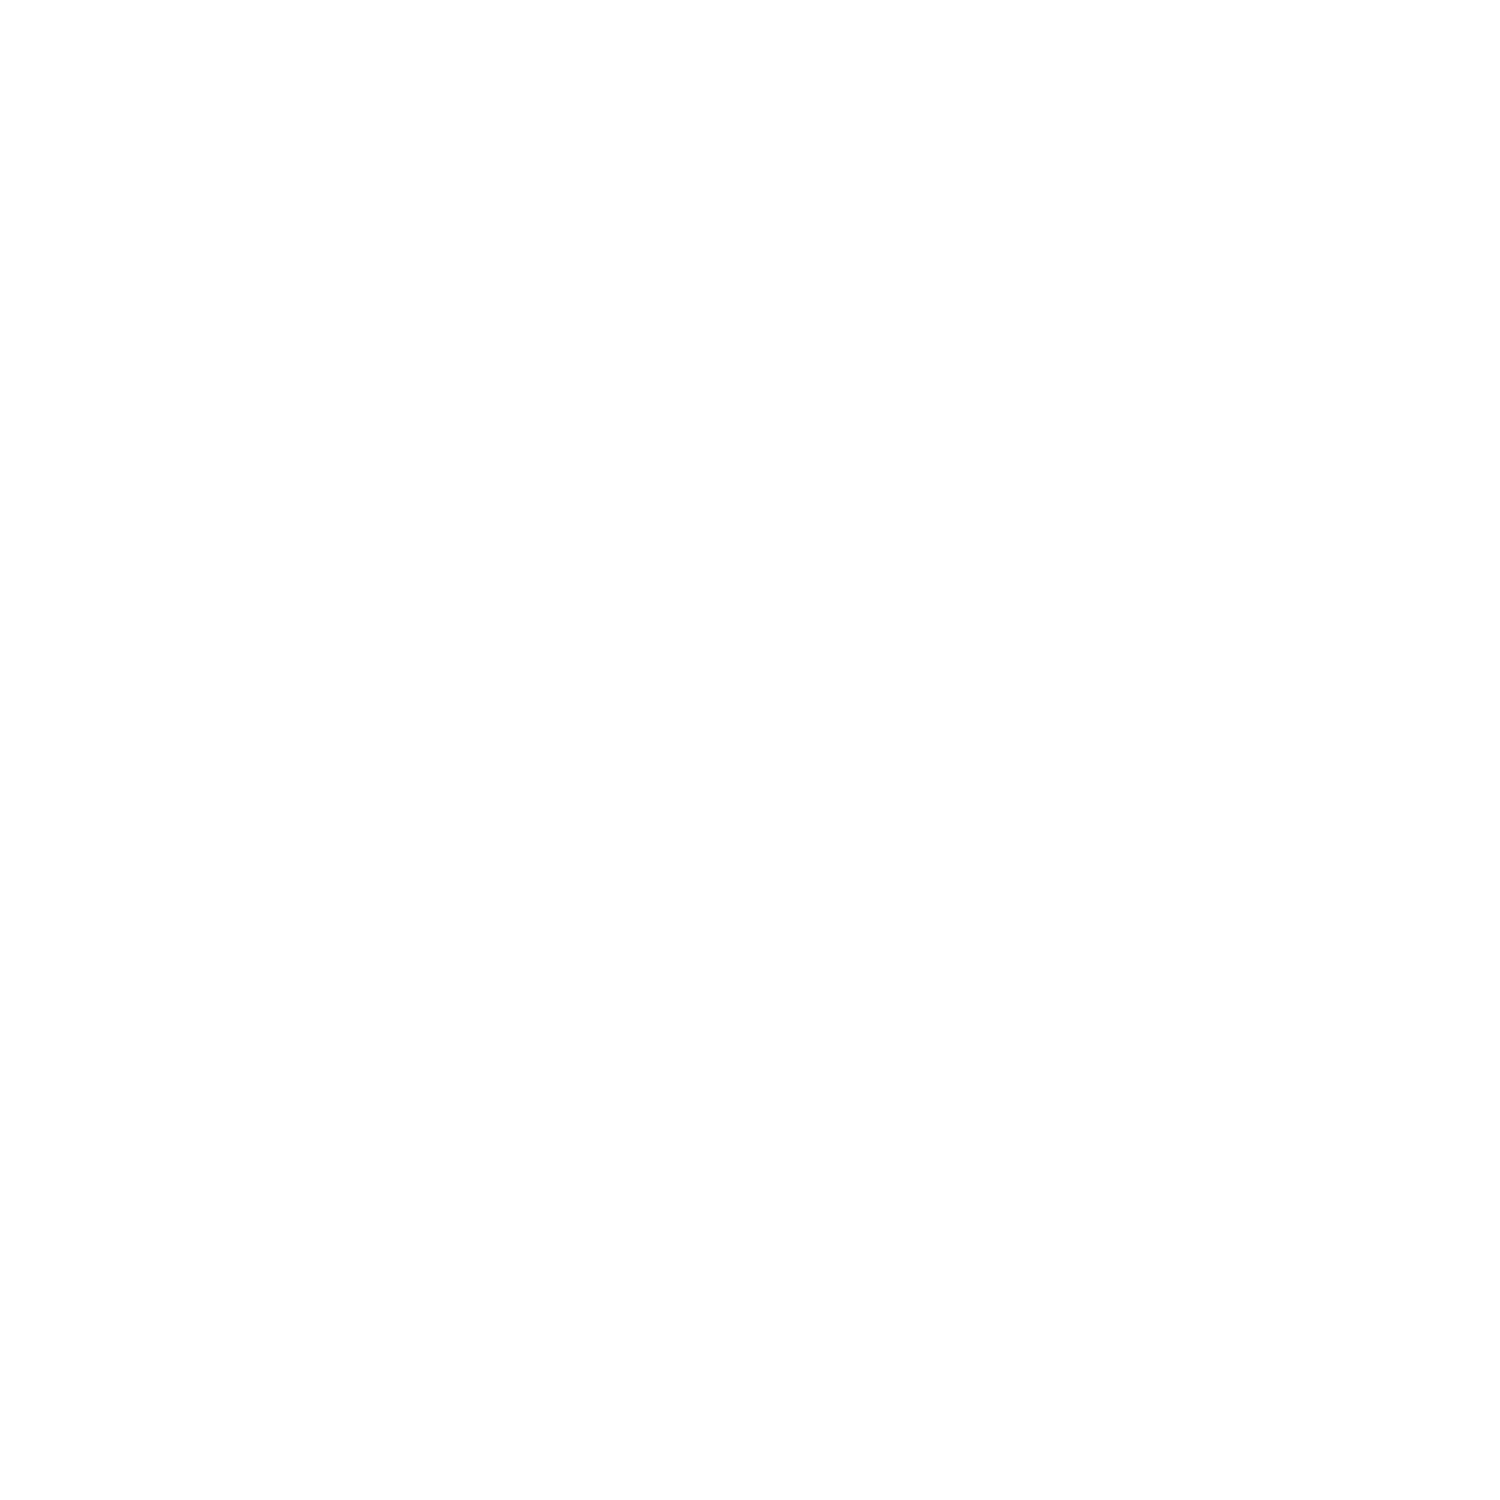 Trish Woodford Photography